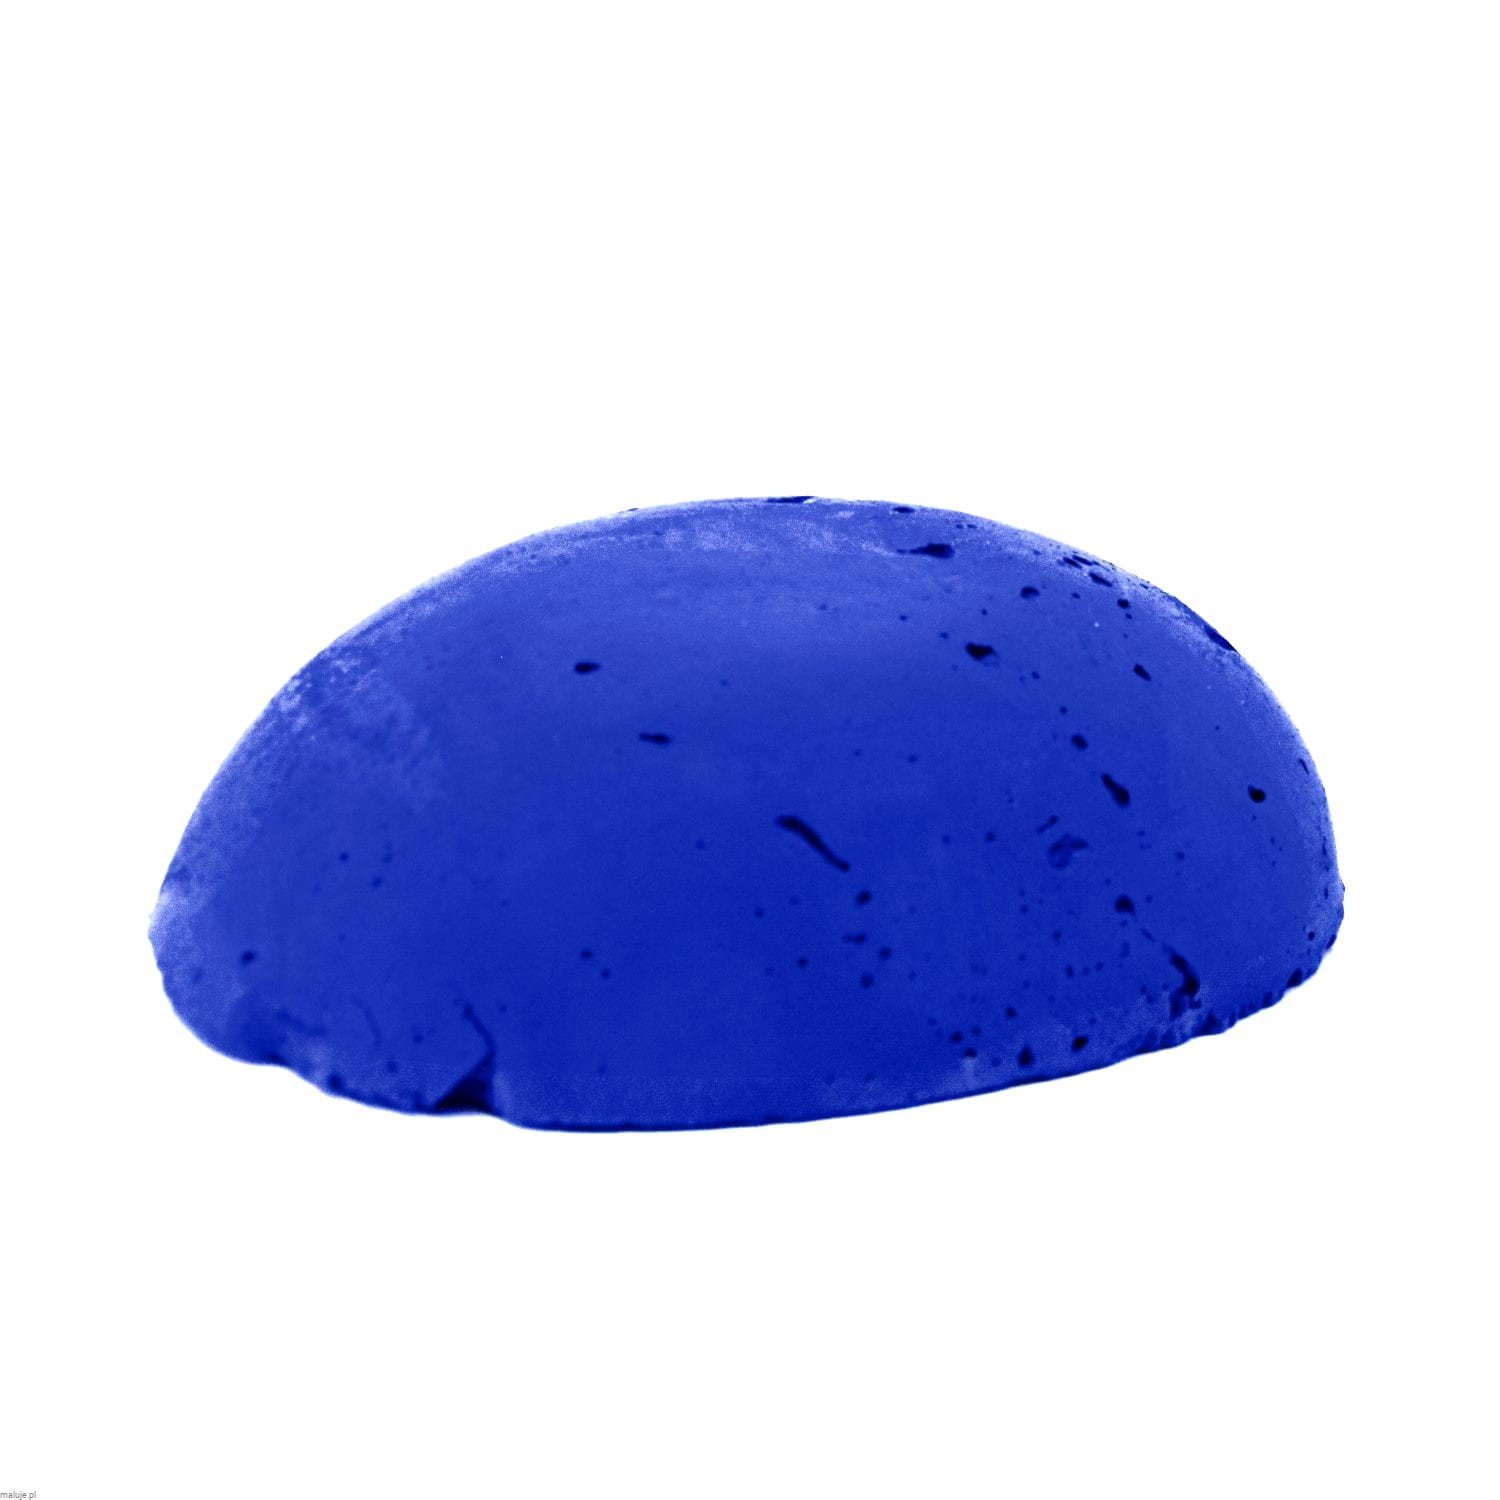 Sennelier Extra Soft Pastel "Pebble" 9x7 cm Ultramarne Blue 388 - pastele suche eksta miękkie duże